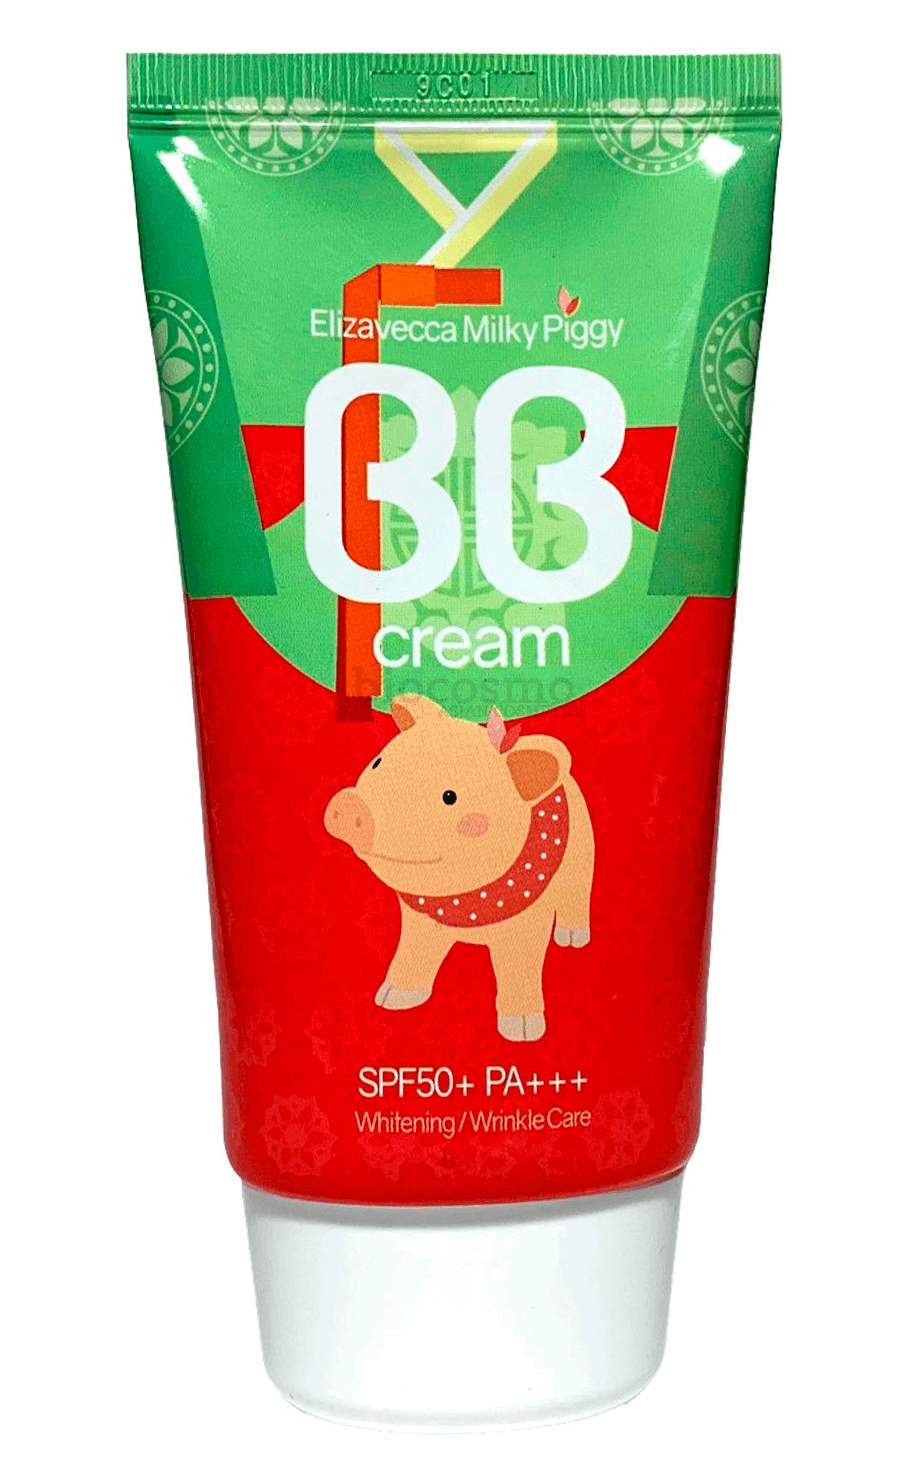 ББ крем Elizavecca Milky Piggy BB Cream SPF50+/PA+++ - 50 мл